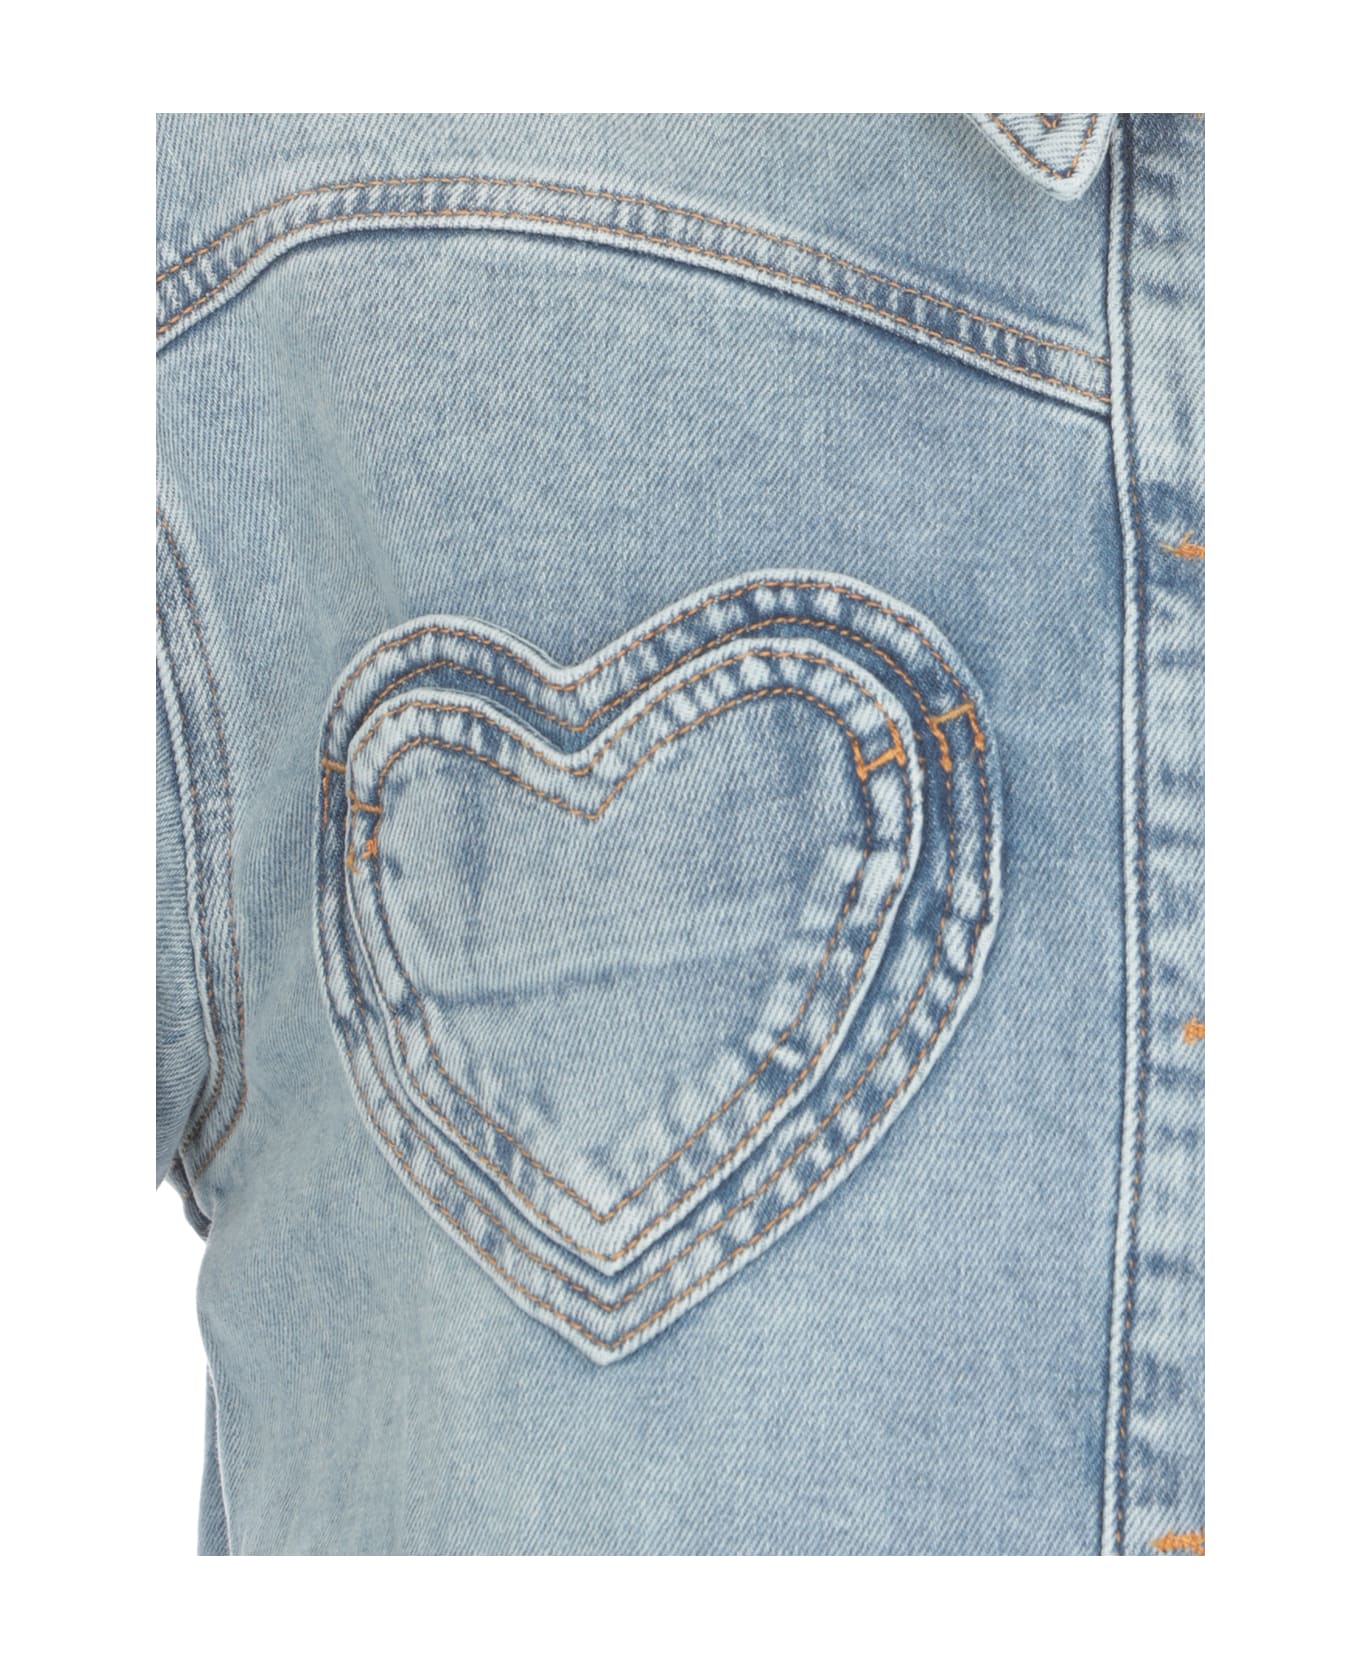 M05CH1N0 Jeans Heart Pockets Denim Jacket - Light Blue ブレザー